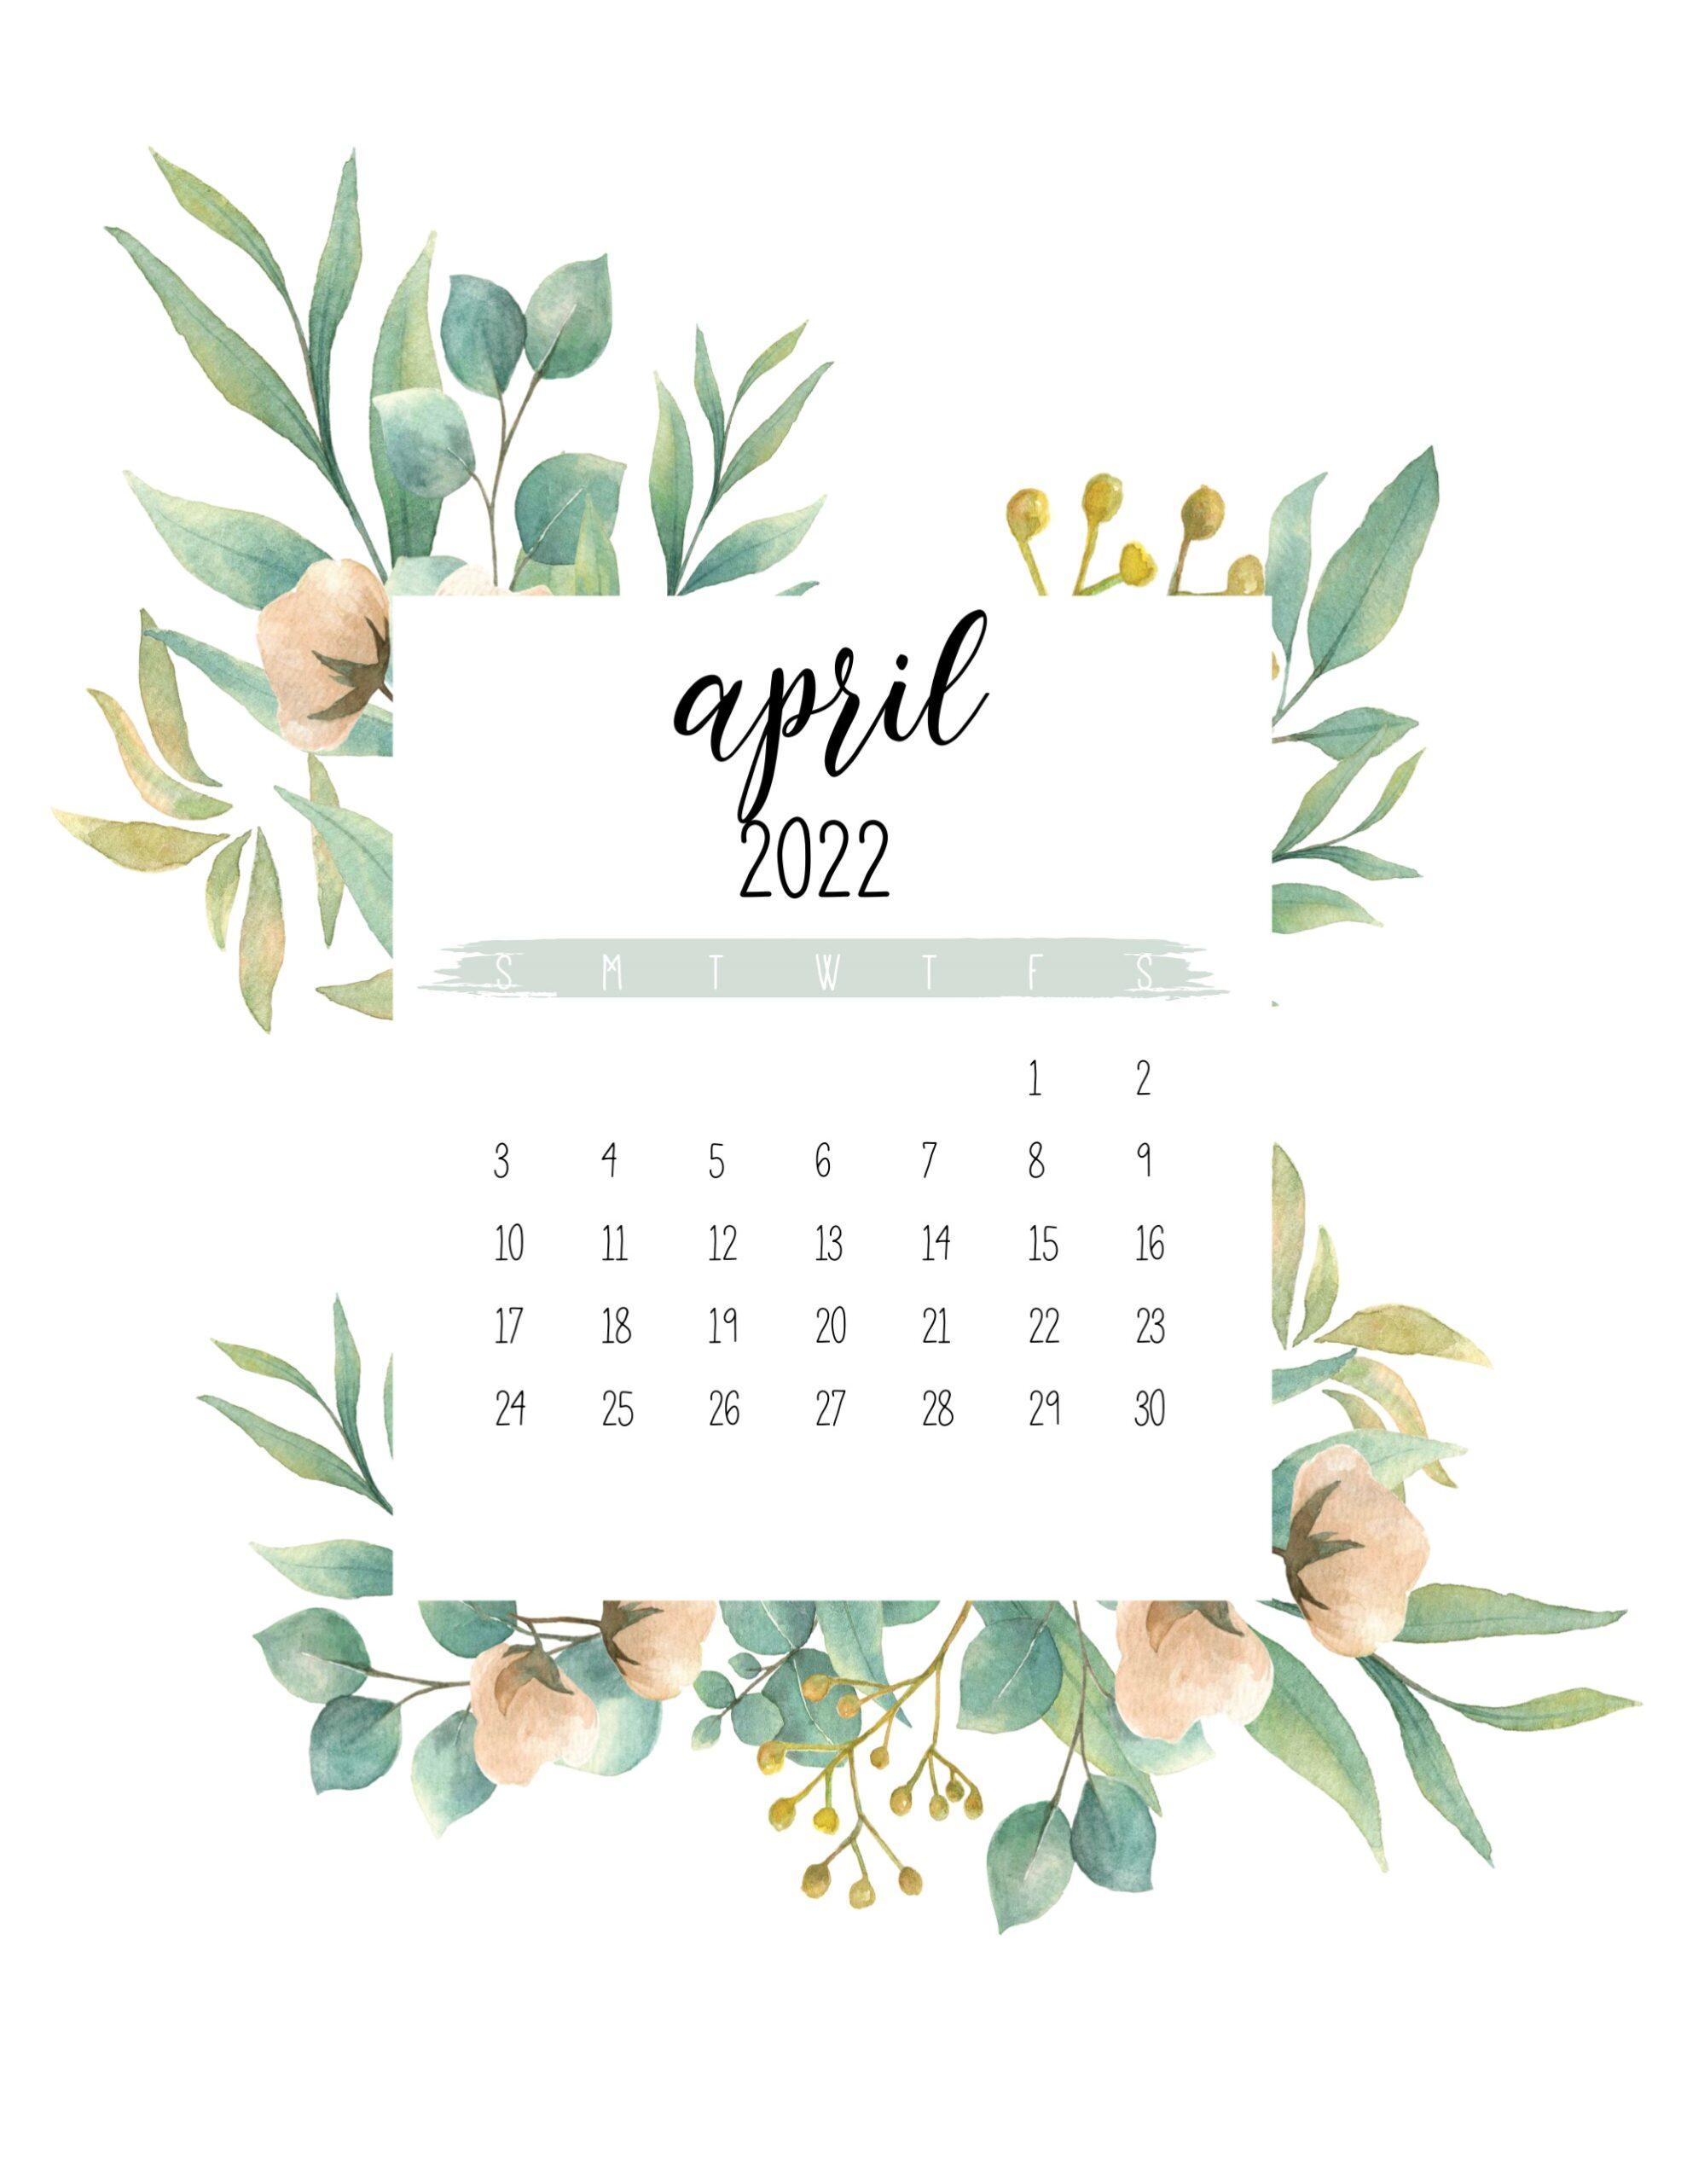 April 2022 Calendar iPhone Wallpapers  PixelsTalkNet